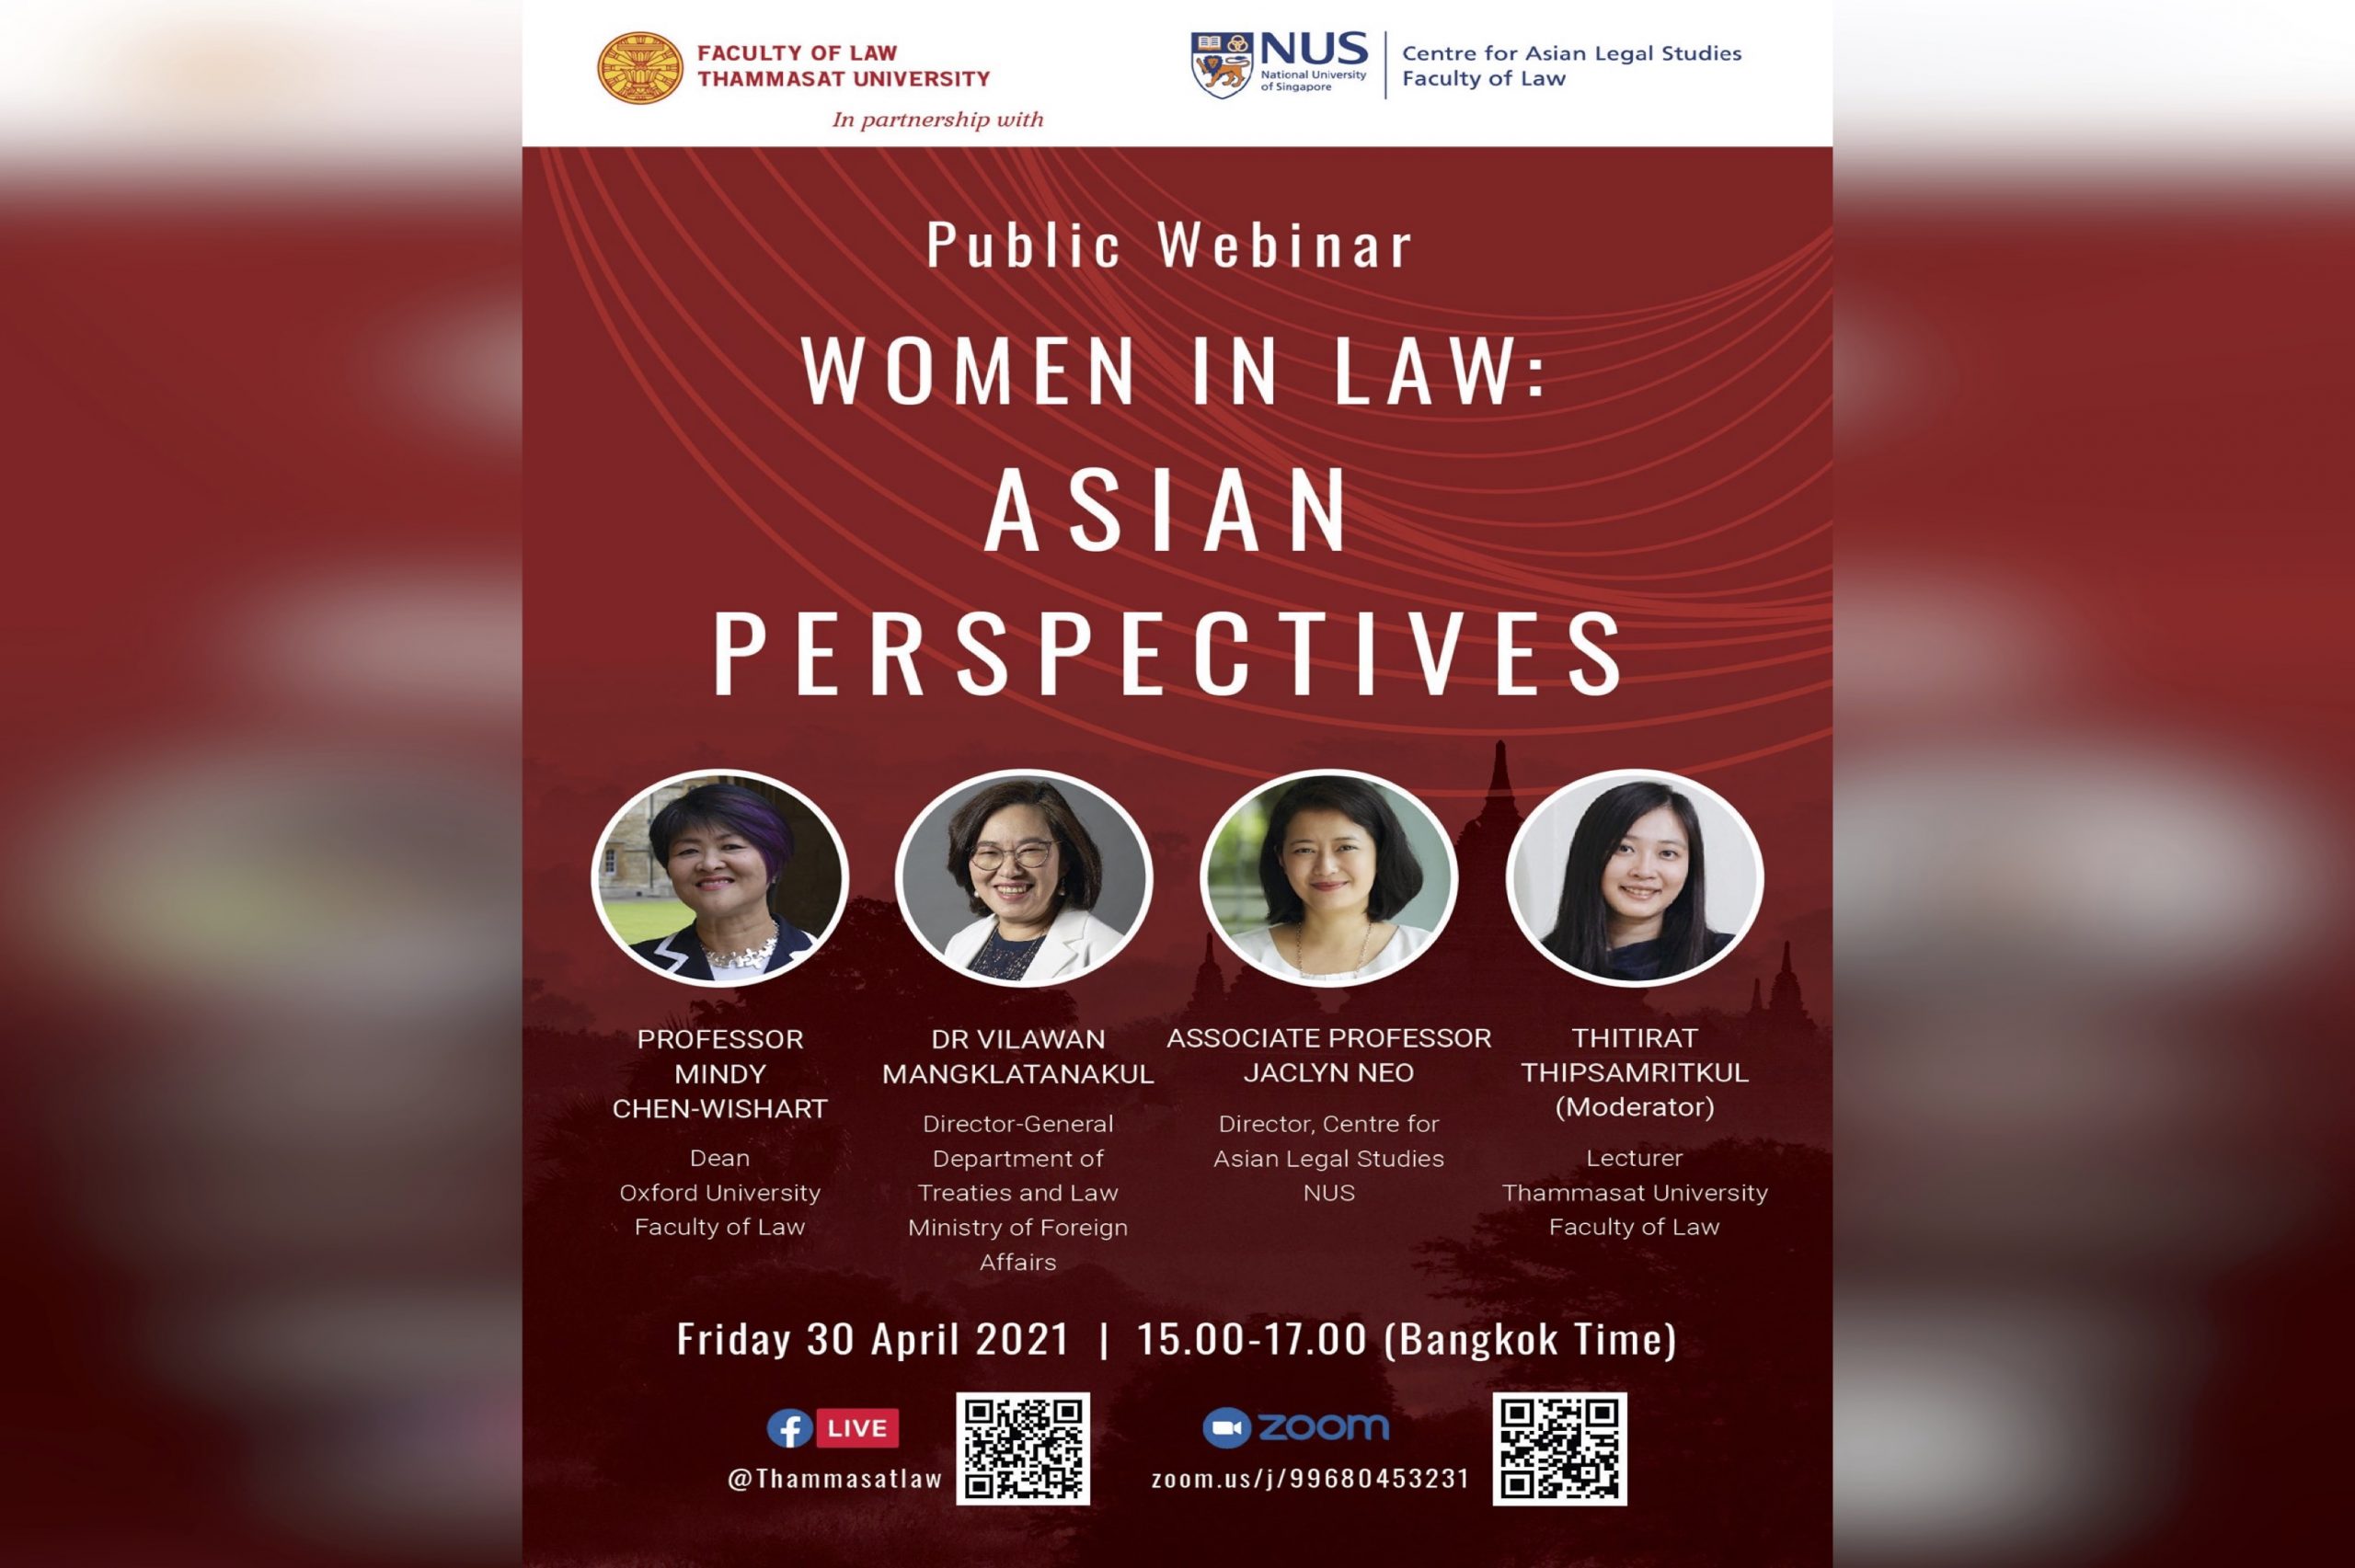 Summary of Public Webinar on “Women in Law: Asian Perspectives”